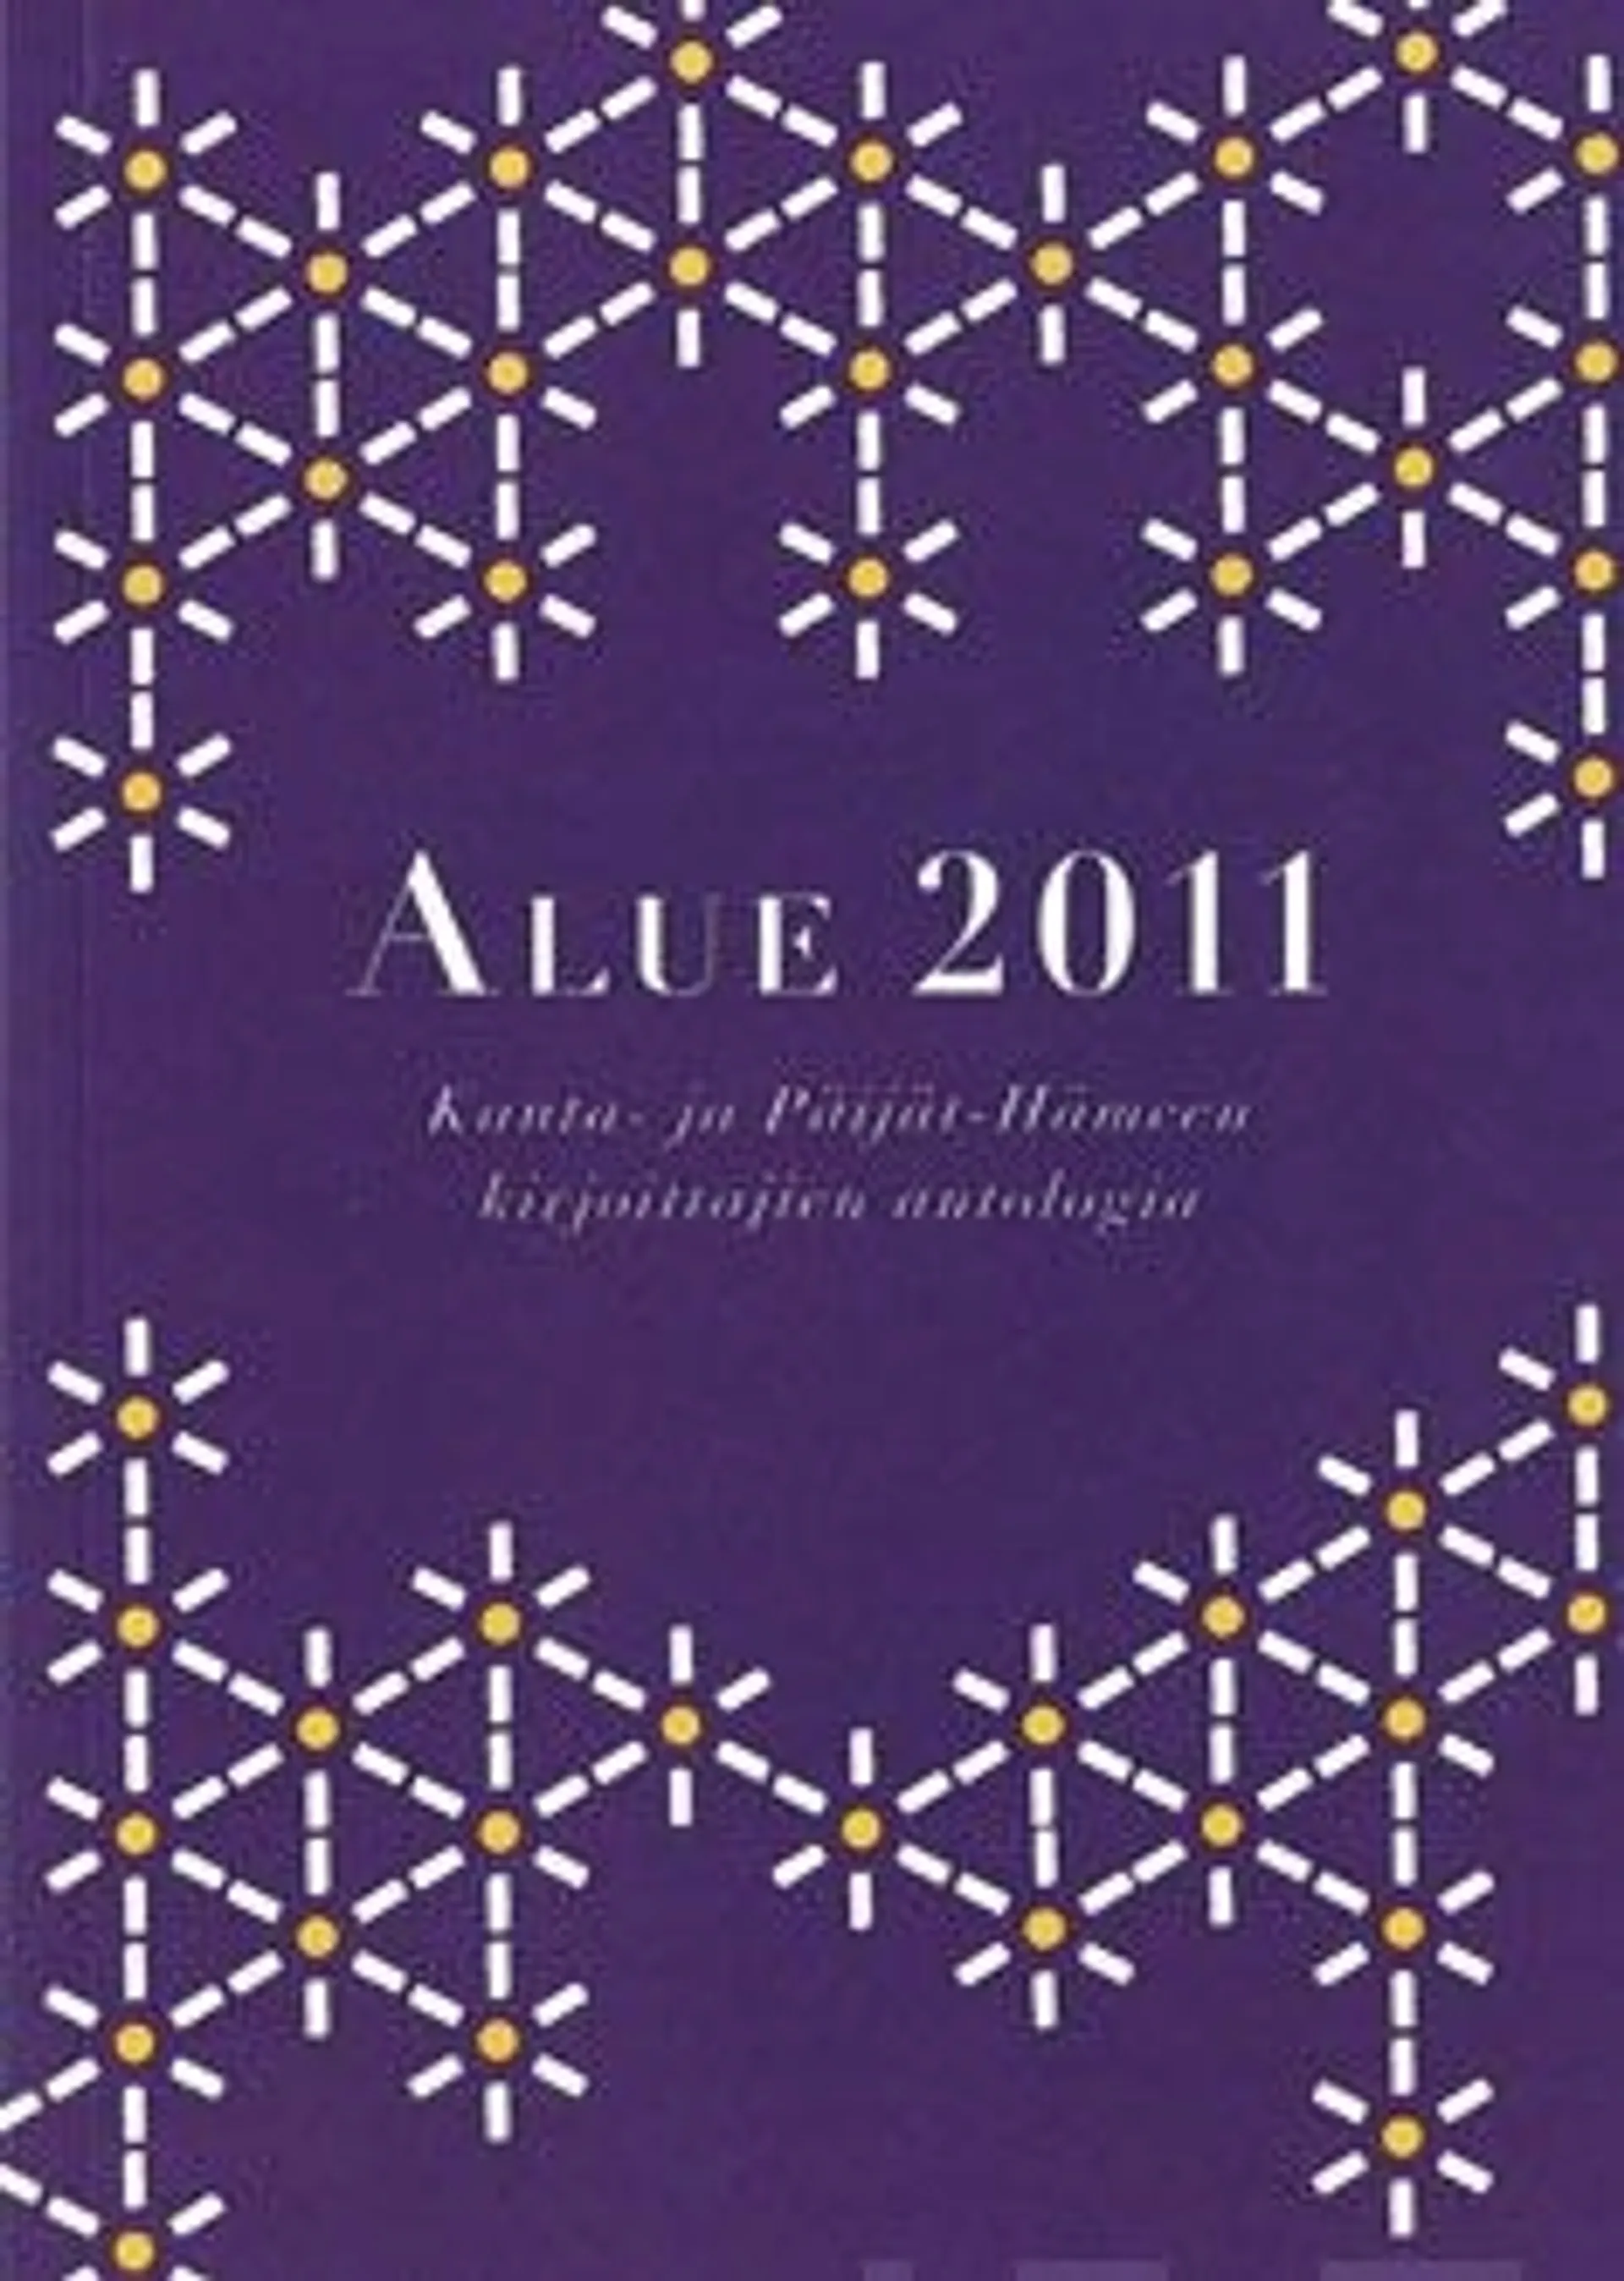 Alue 2011